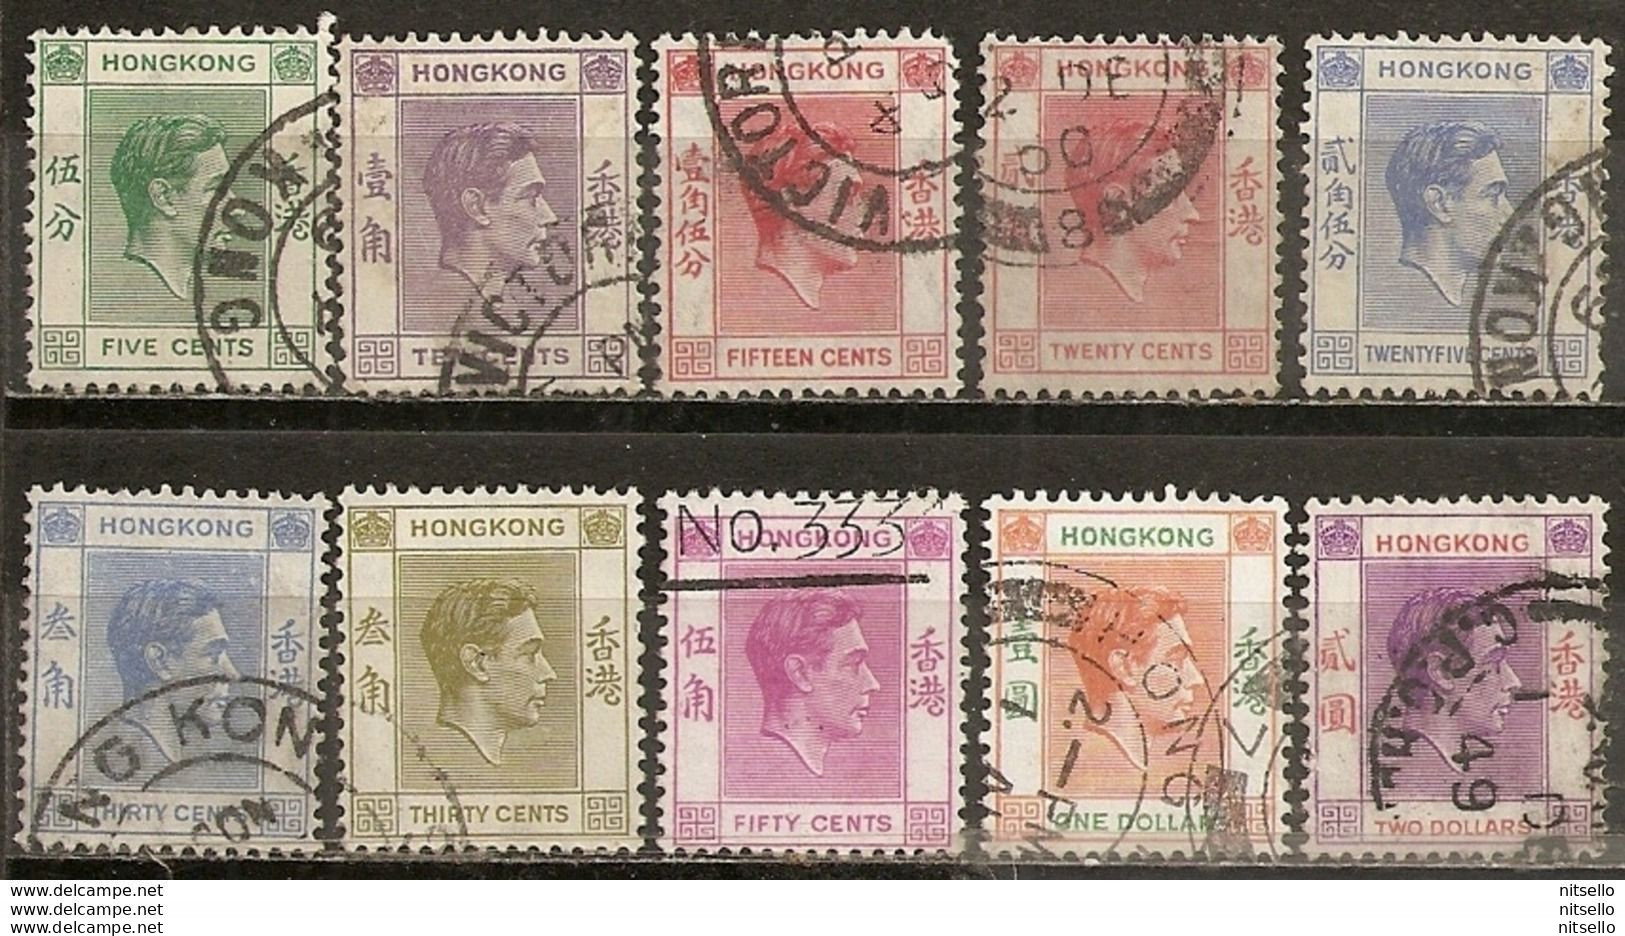 LOTE 2217 ///   (C110) COLONIAS INGLESAS - HONG KONG 1938 George VI ¡¡¡ OFERTA - LIQUIDATION !!! JE LIQUIDE !!! - Used Stamps